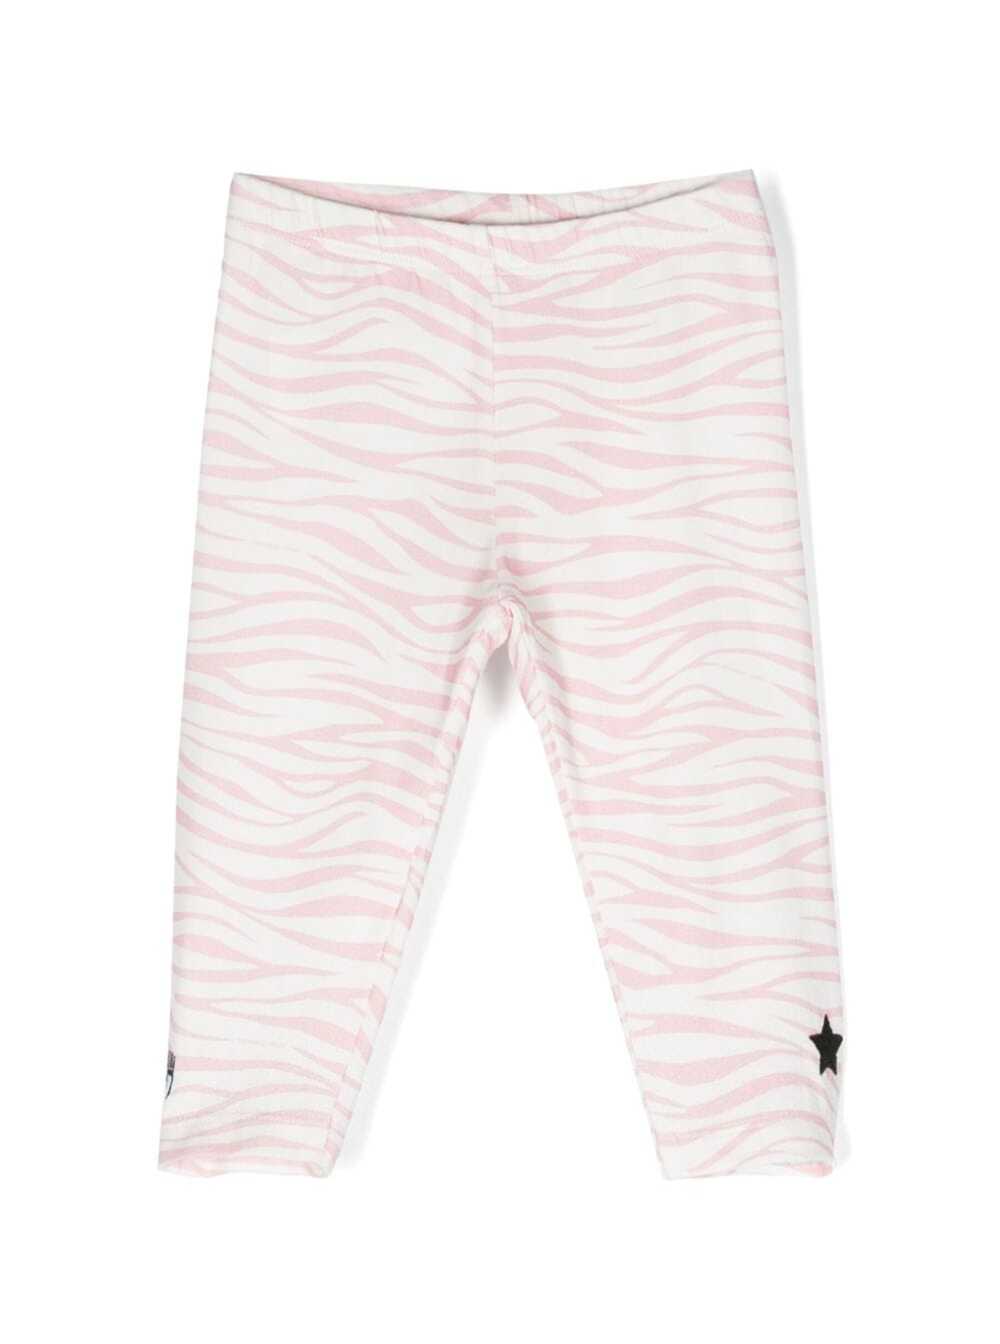 Chiara Ferragni Pink And White Leggings With Zebra And Logo Print In Stretch Cotton Girl